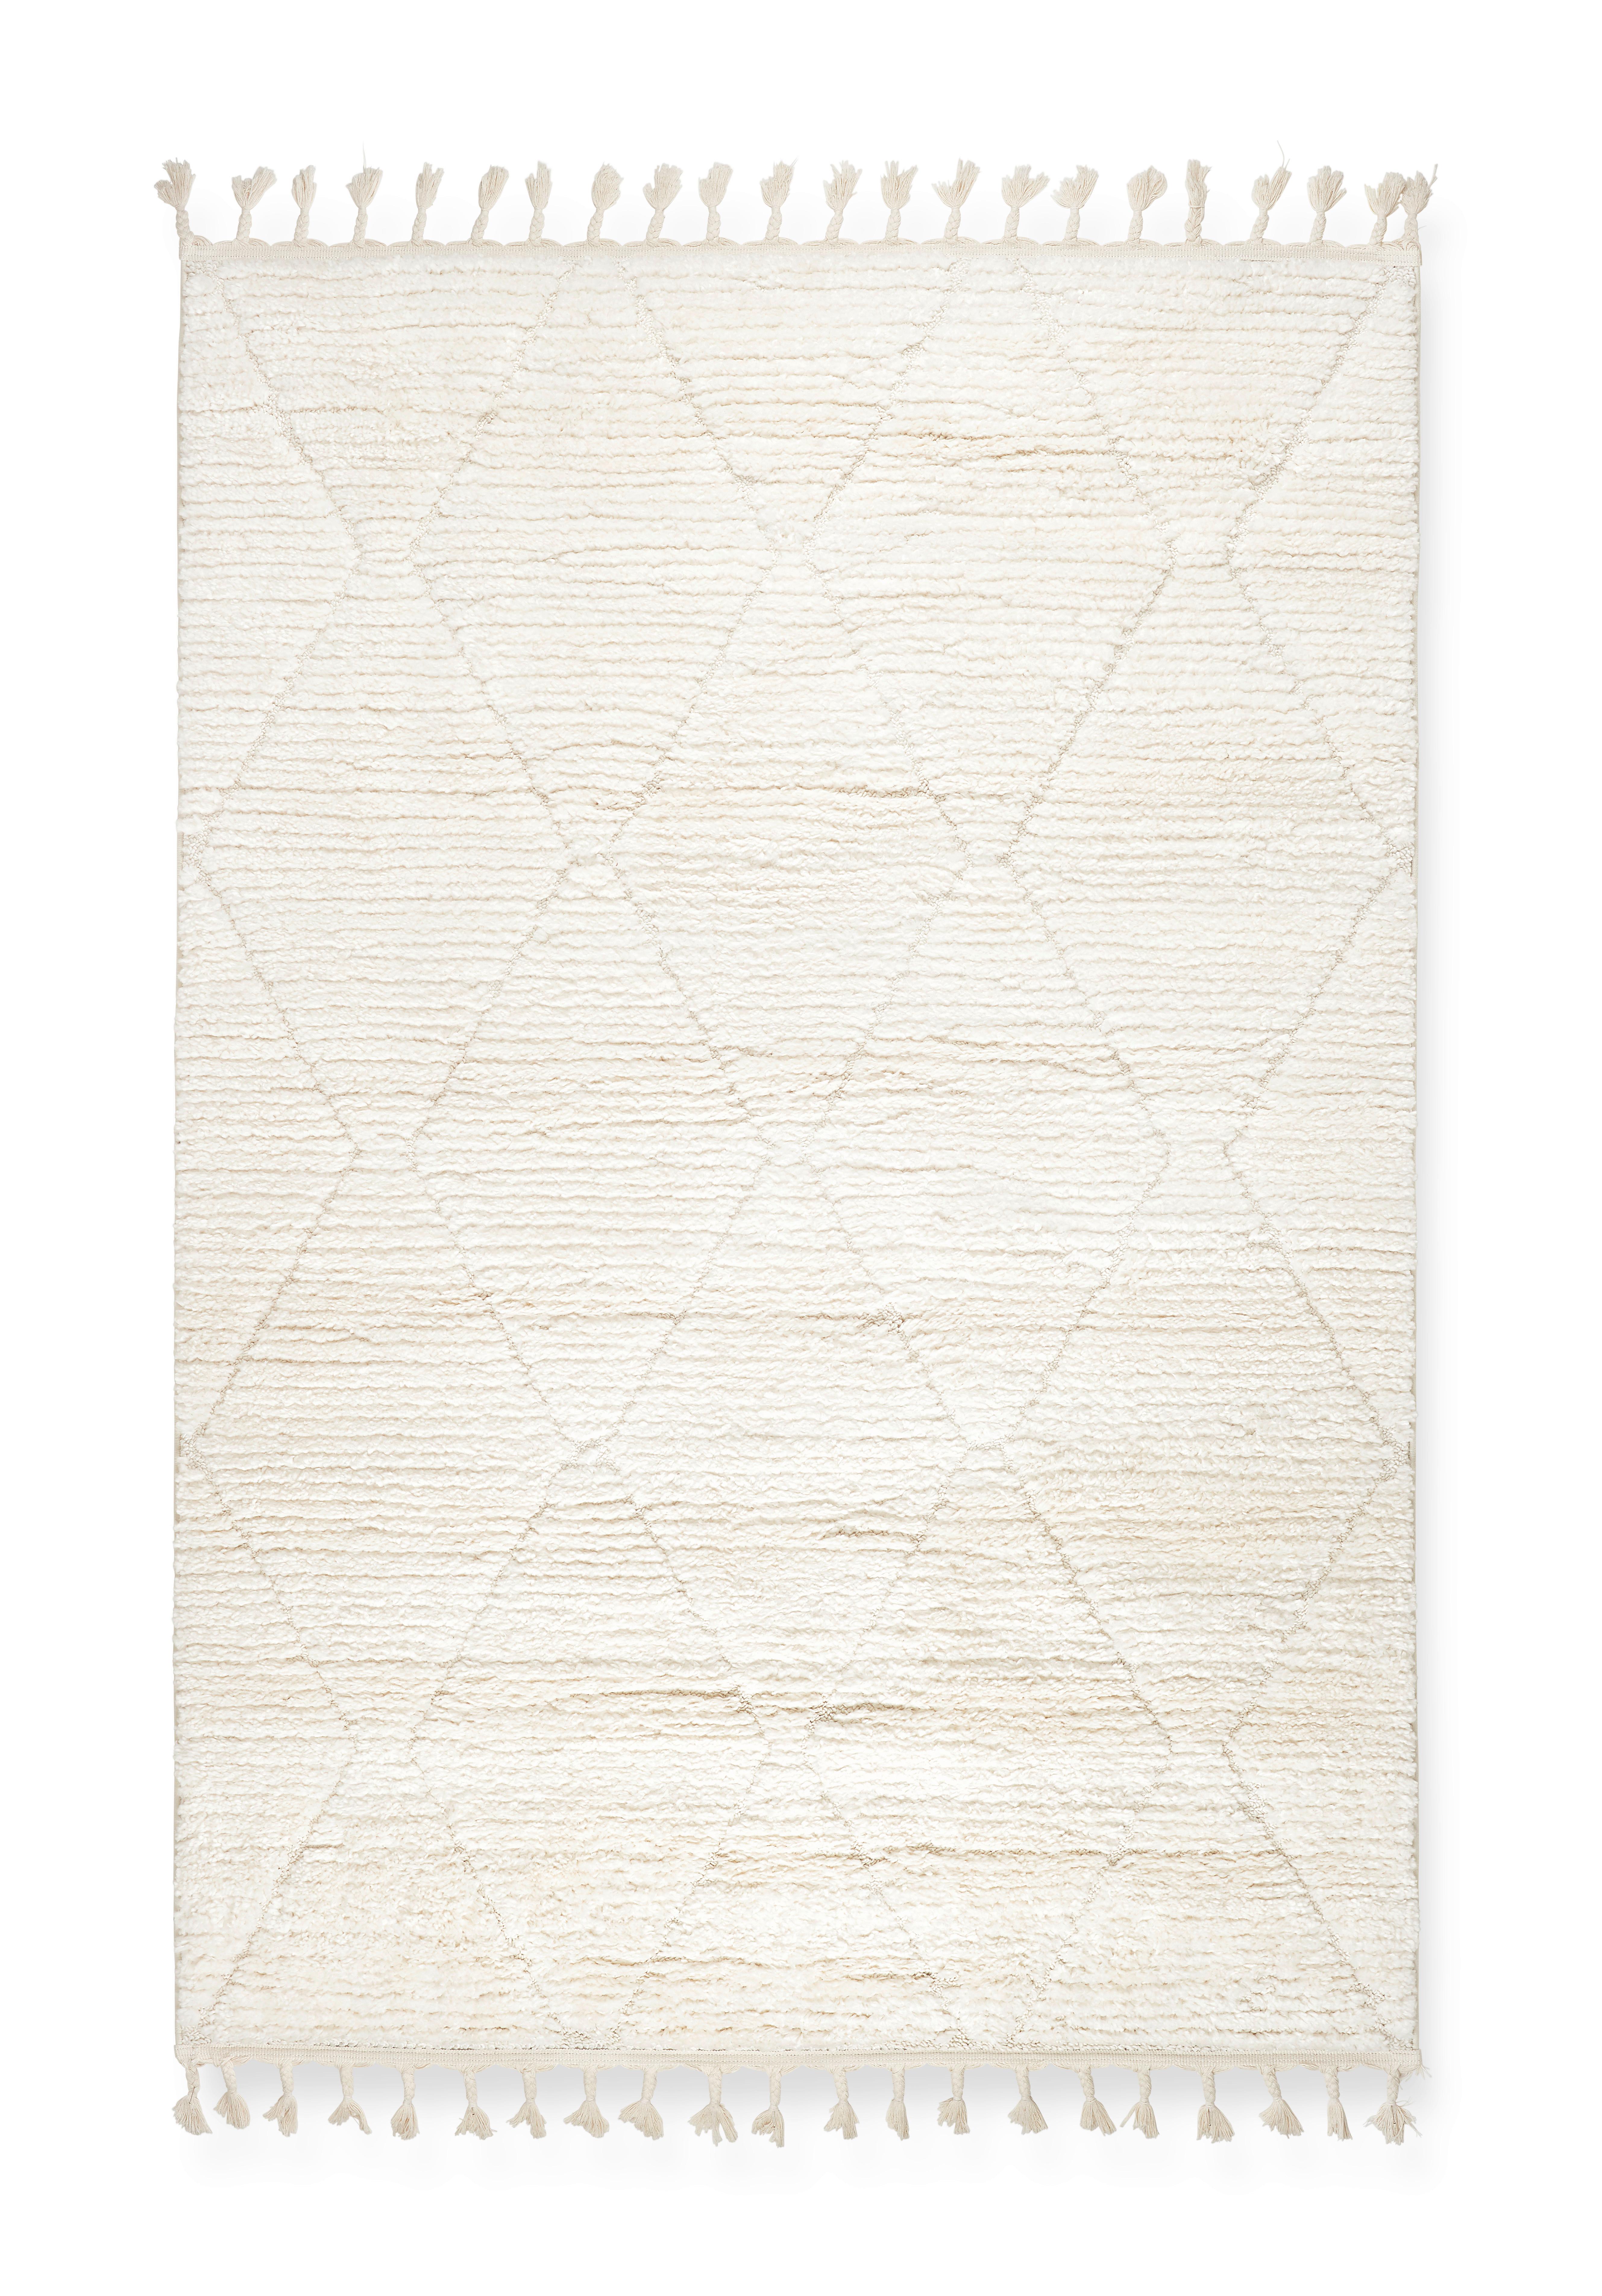 Dywan tkany SELMA 1, ok. 80x150 cm - biały, Basics, tkanina (80/150cm) - Modern Living